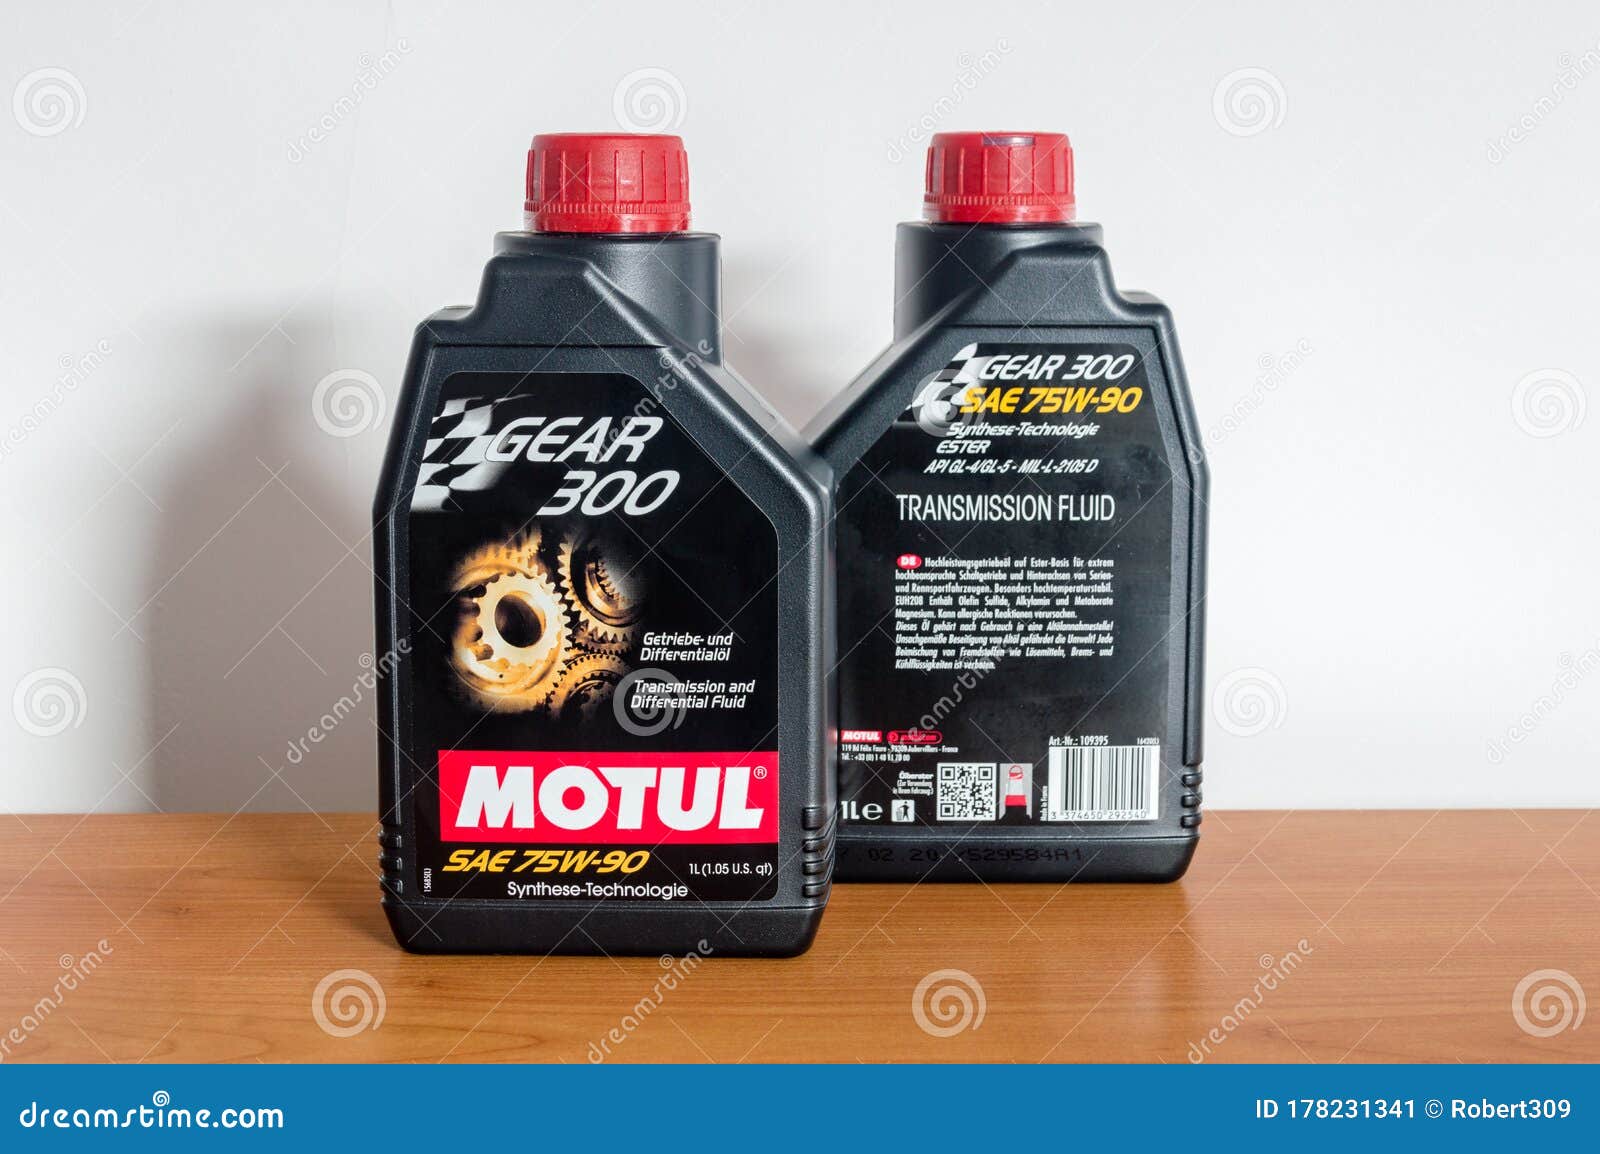 pruszcz-gdanski-poland-april-bottles-motul-gear-w-gear-oil-transmission-differential-fluid-bottles-motul-gear-w-gear-oil-178231341.jpg